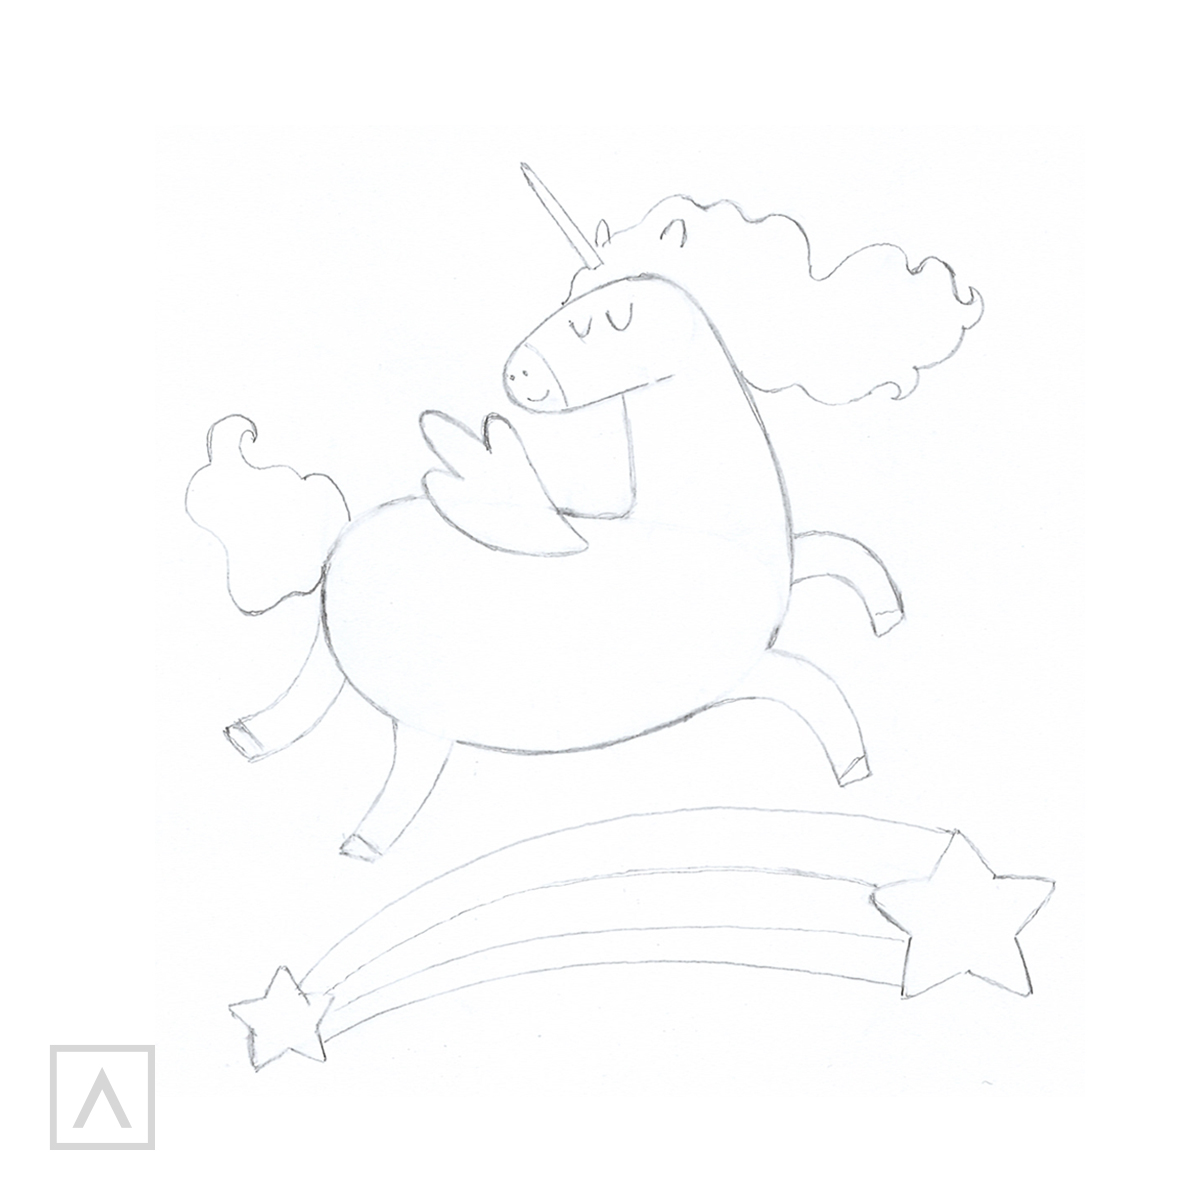 How to Draw a Unicorn - Step 5